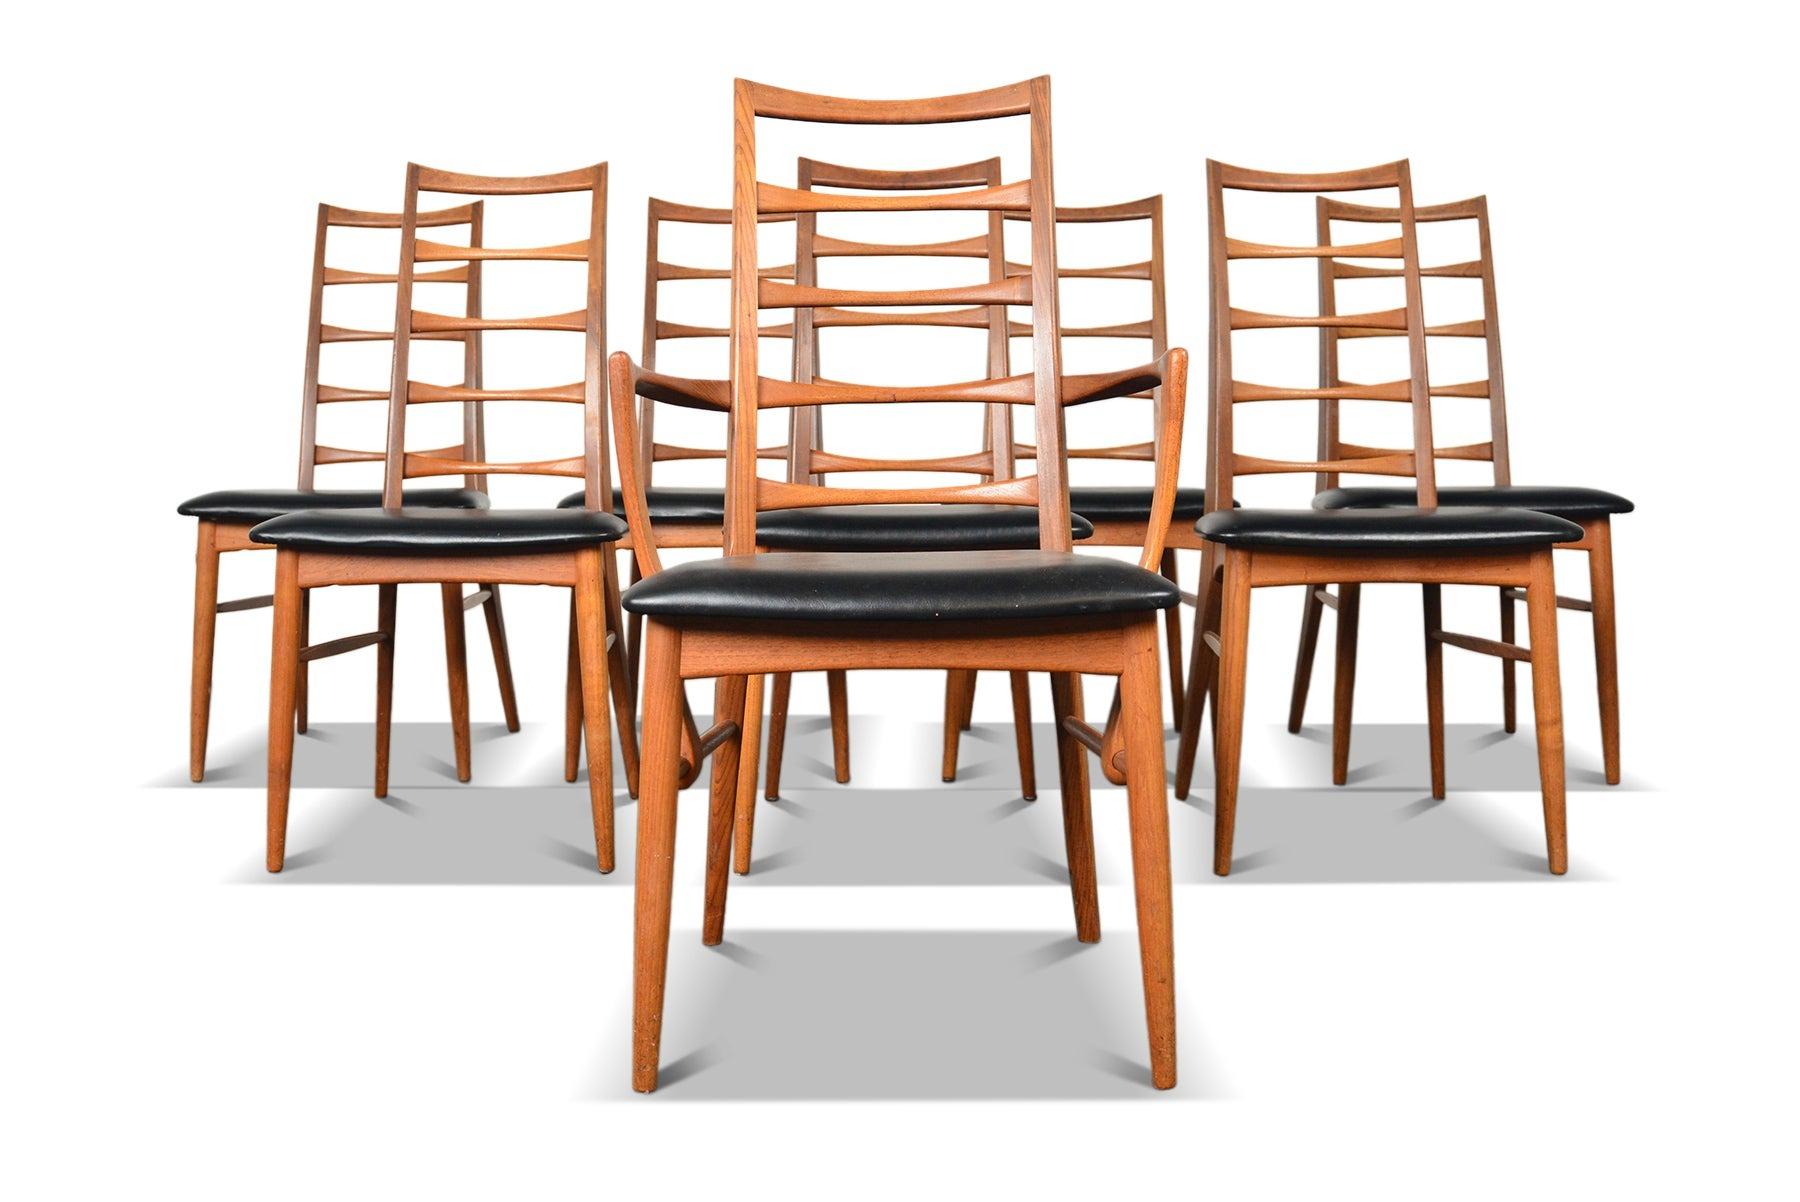 Origin: Denmark
Designer: Niels Koefoed
Manufacturer: Koefoed Hornslet Møbelfabrik
Era: 1960s
Dimensions (side chairs): 18″ wide x 16.5″ deep x 38″ tall, Seat: 17.5″ tall, Captains chair: 21.5